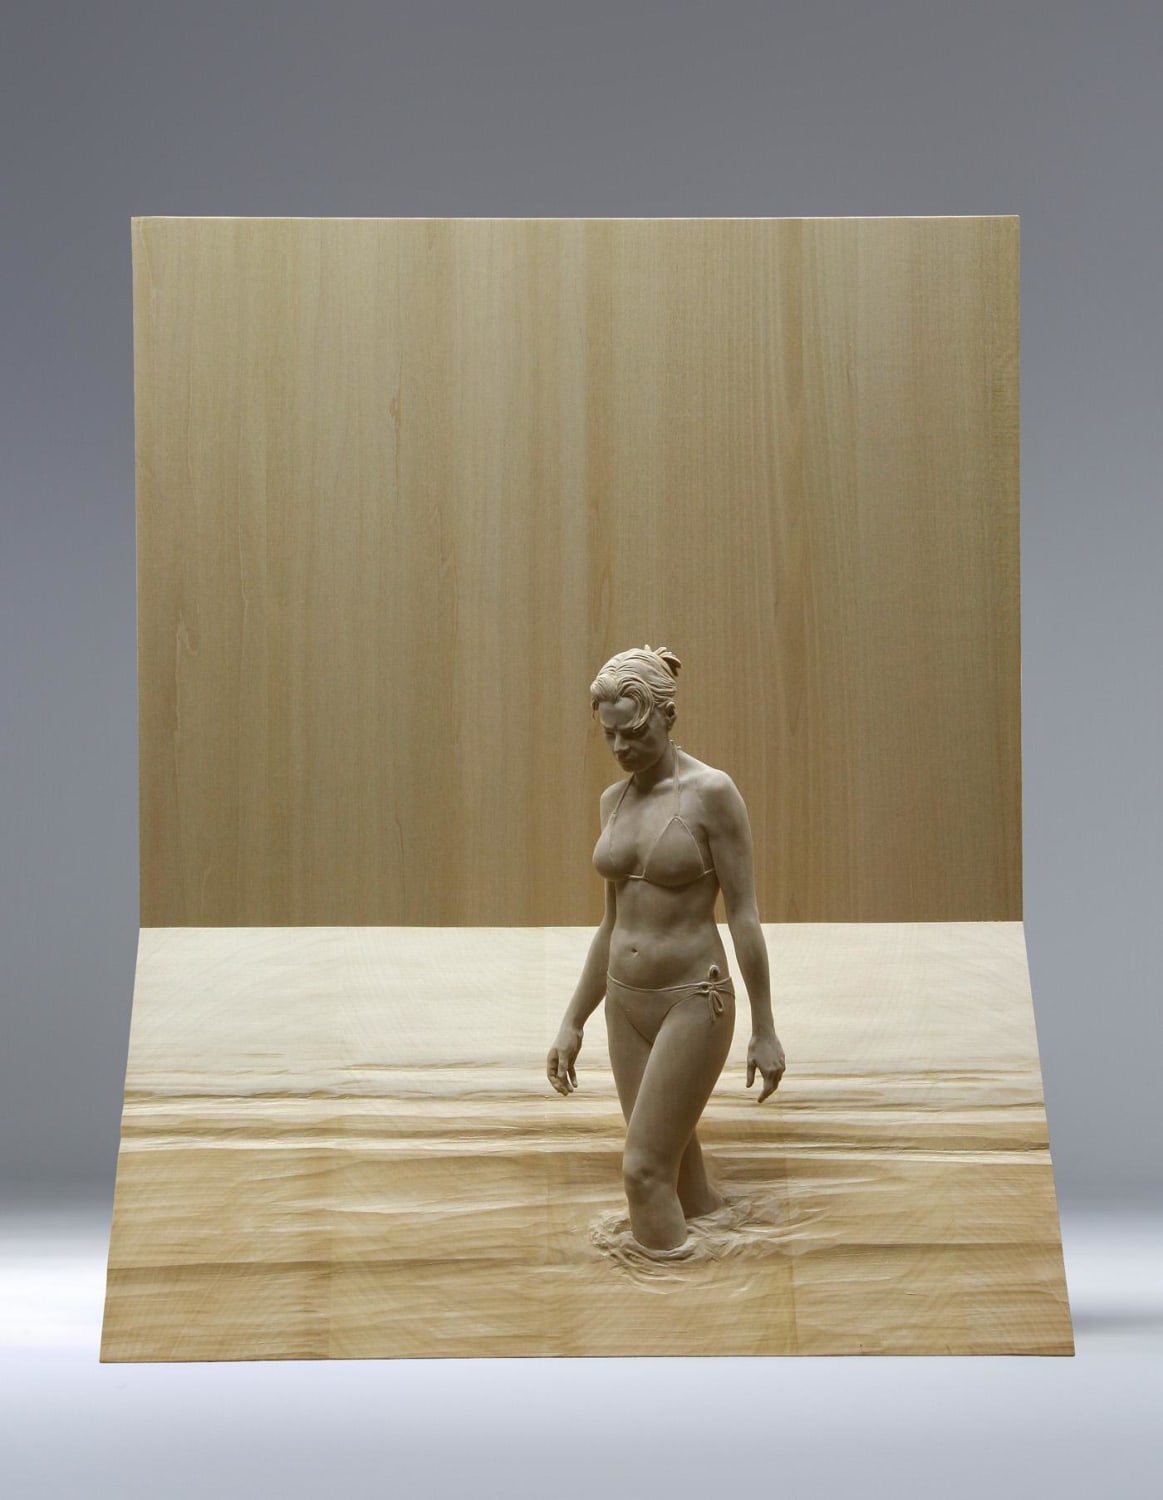 Incredible lifelike wooden sculptures by artist Peter Demetz